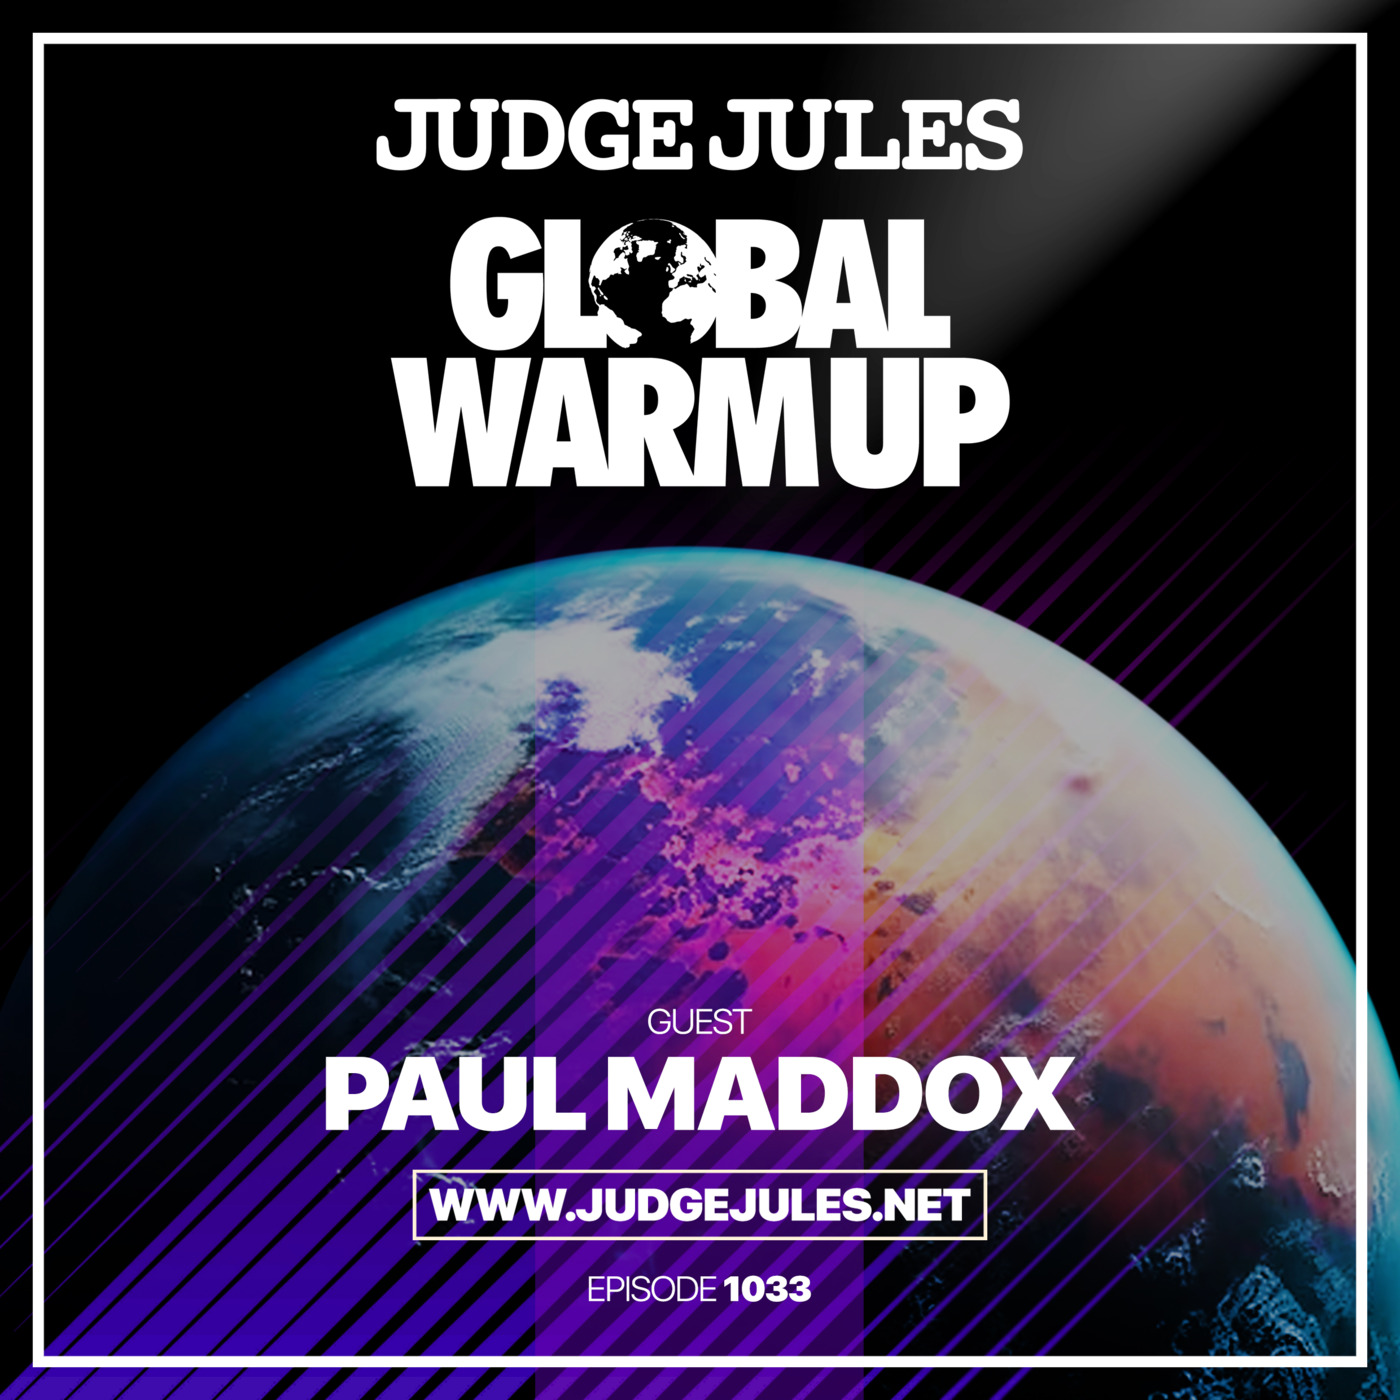 Episode 1033: JUDGE JULES PRESENTS THE GLOBAL WARM UP EPISODE 1033